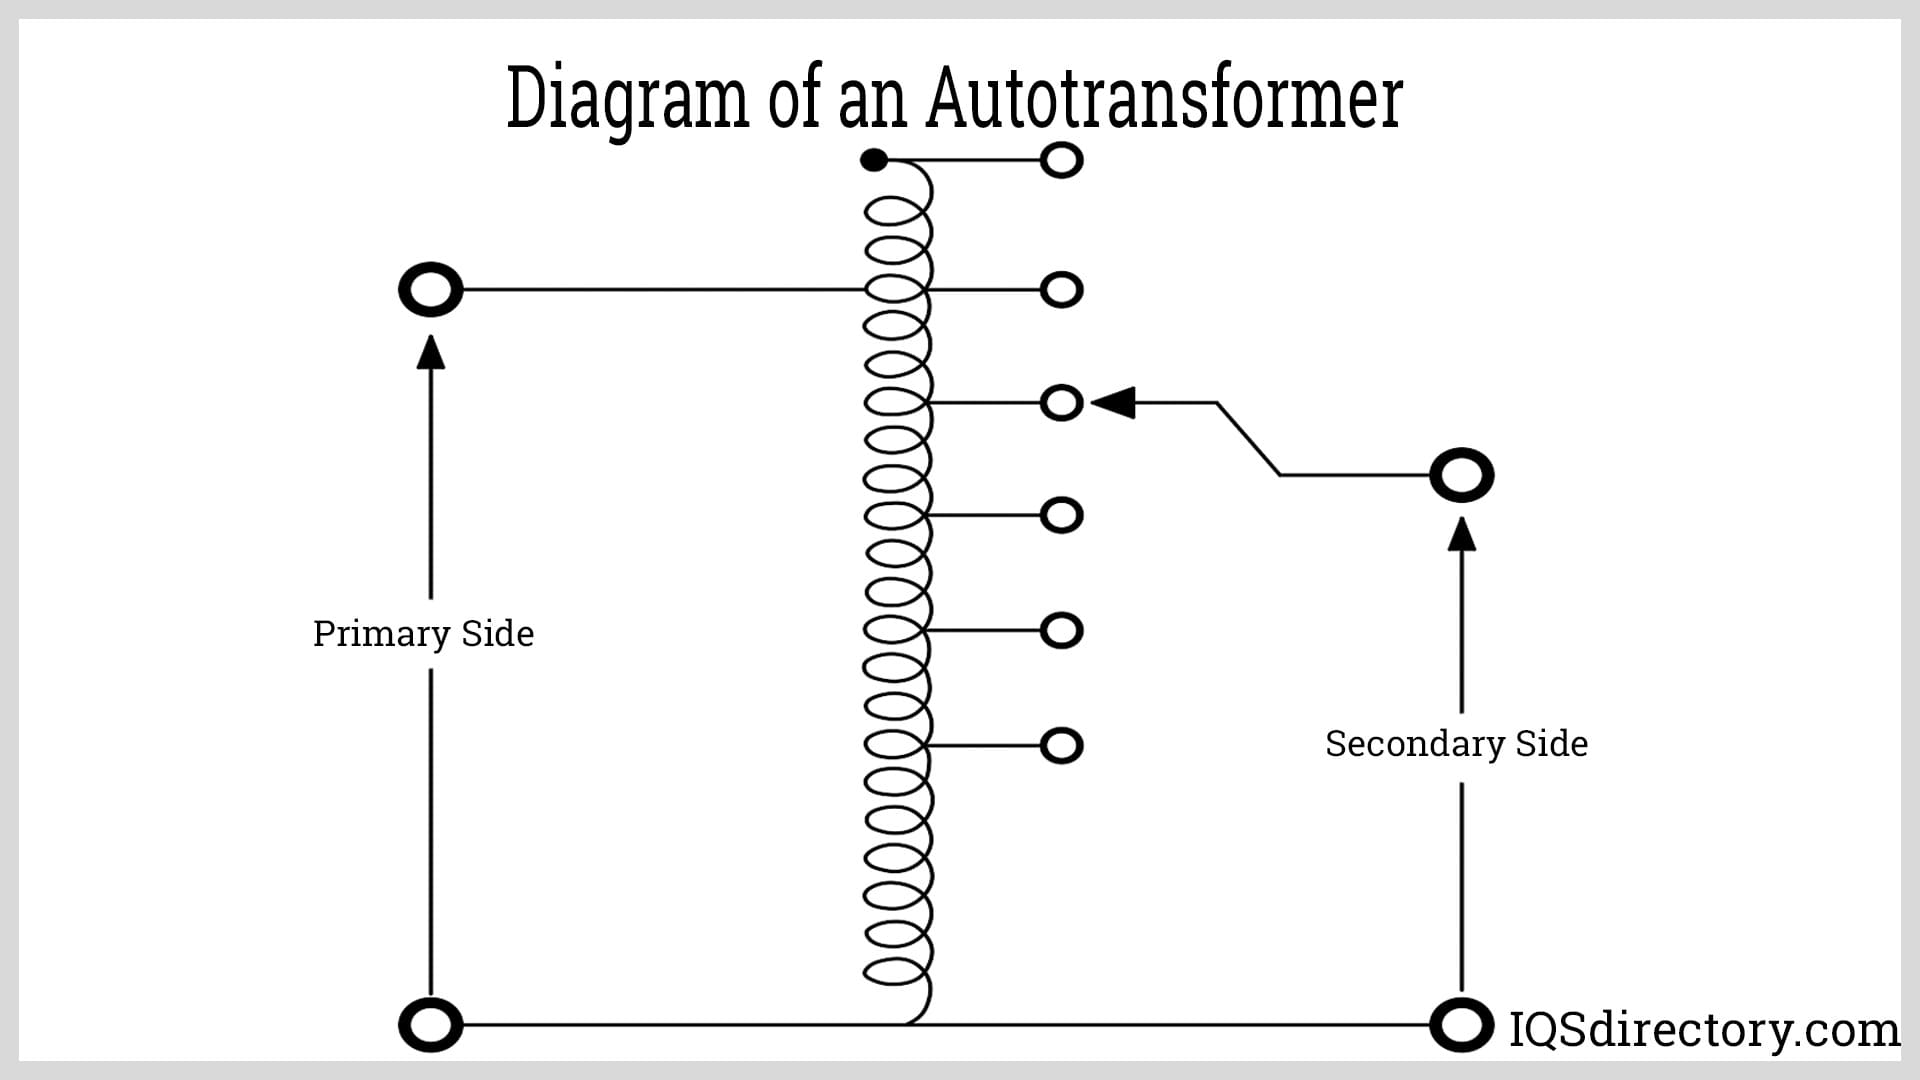 Diagram of an Autotransformer